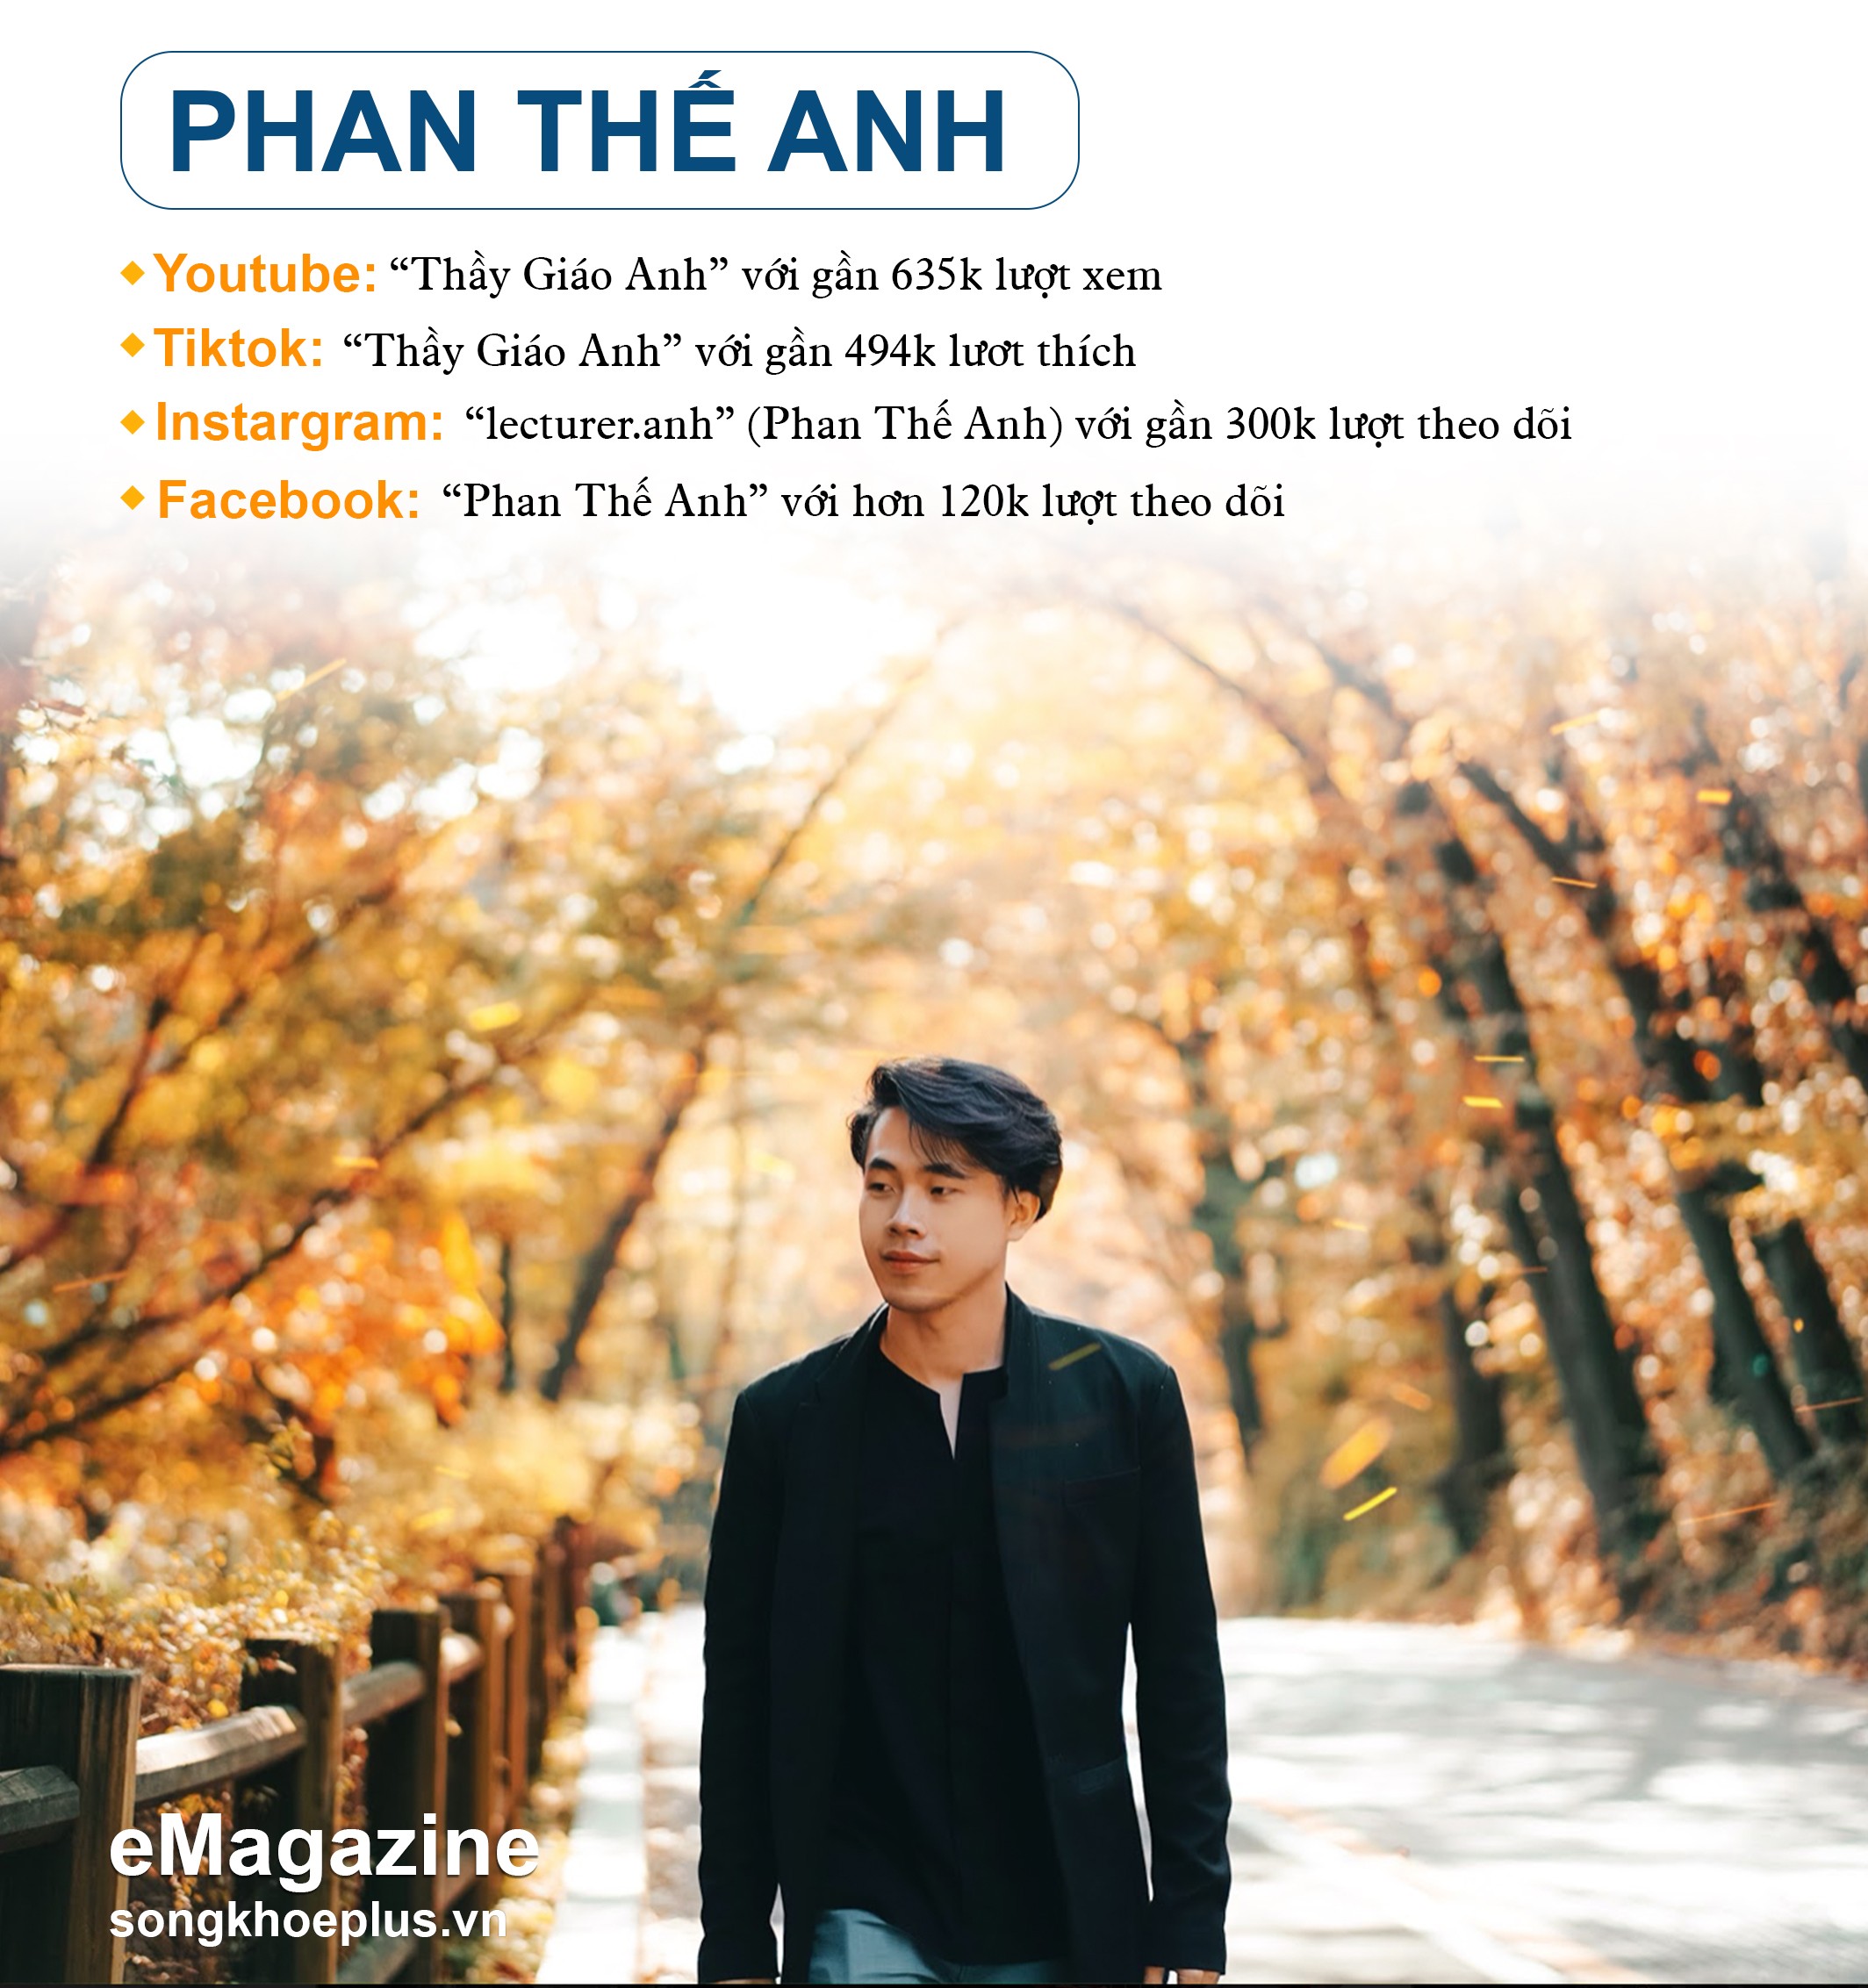 phan-the-anh-anh-2-1628325288.jpg